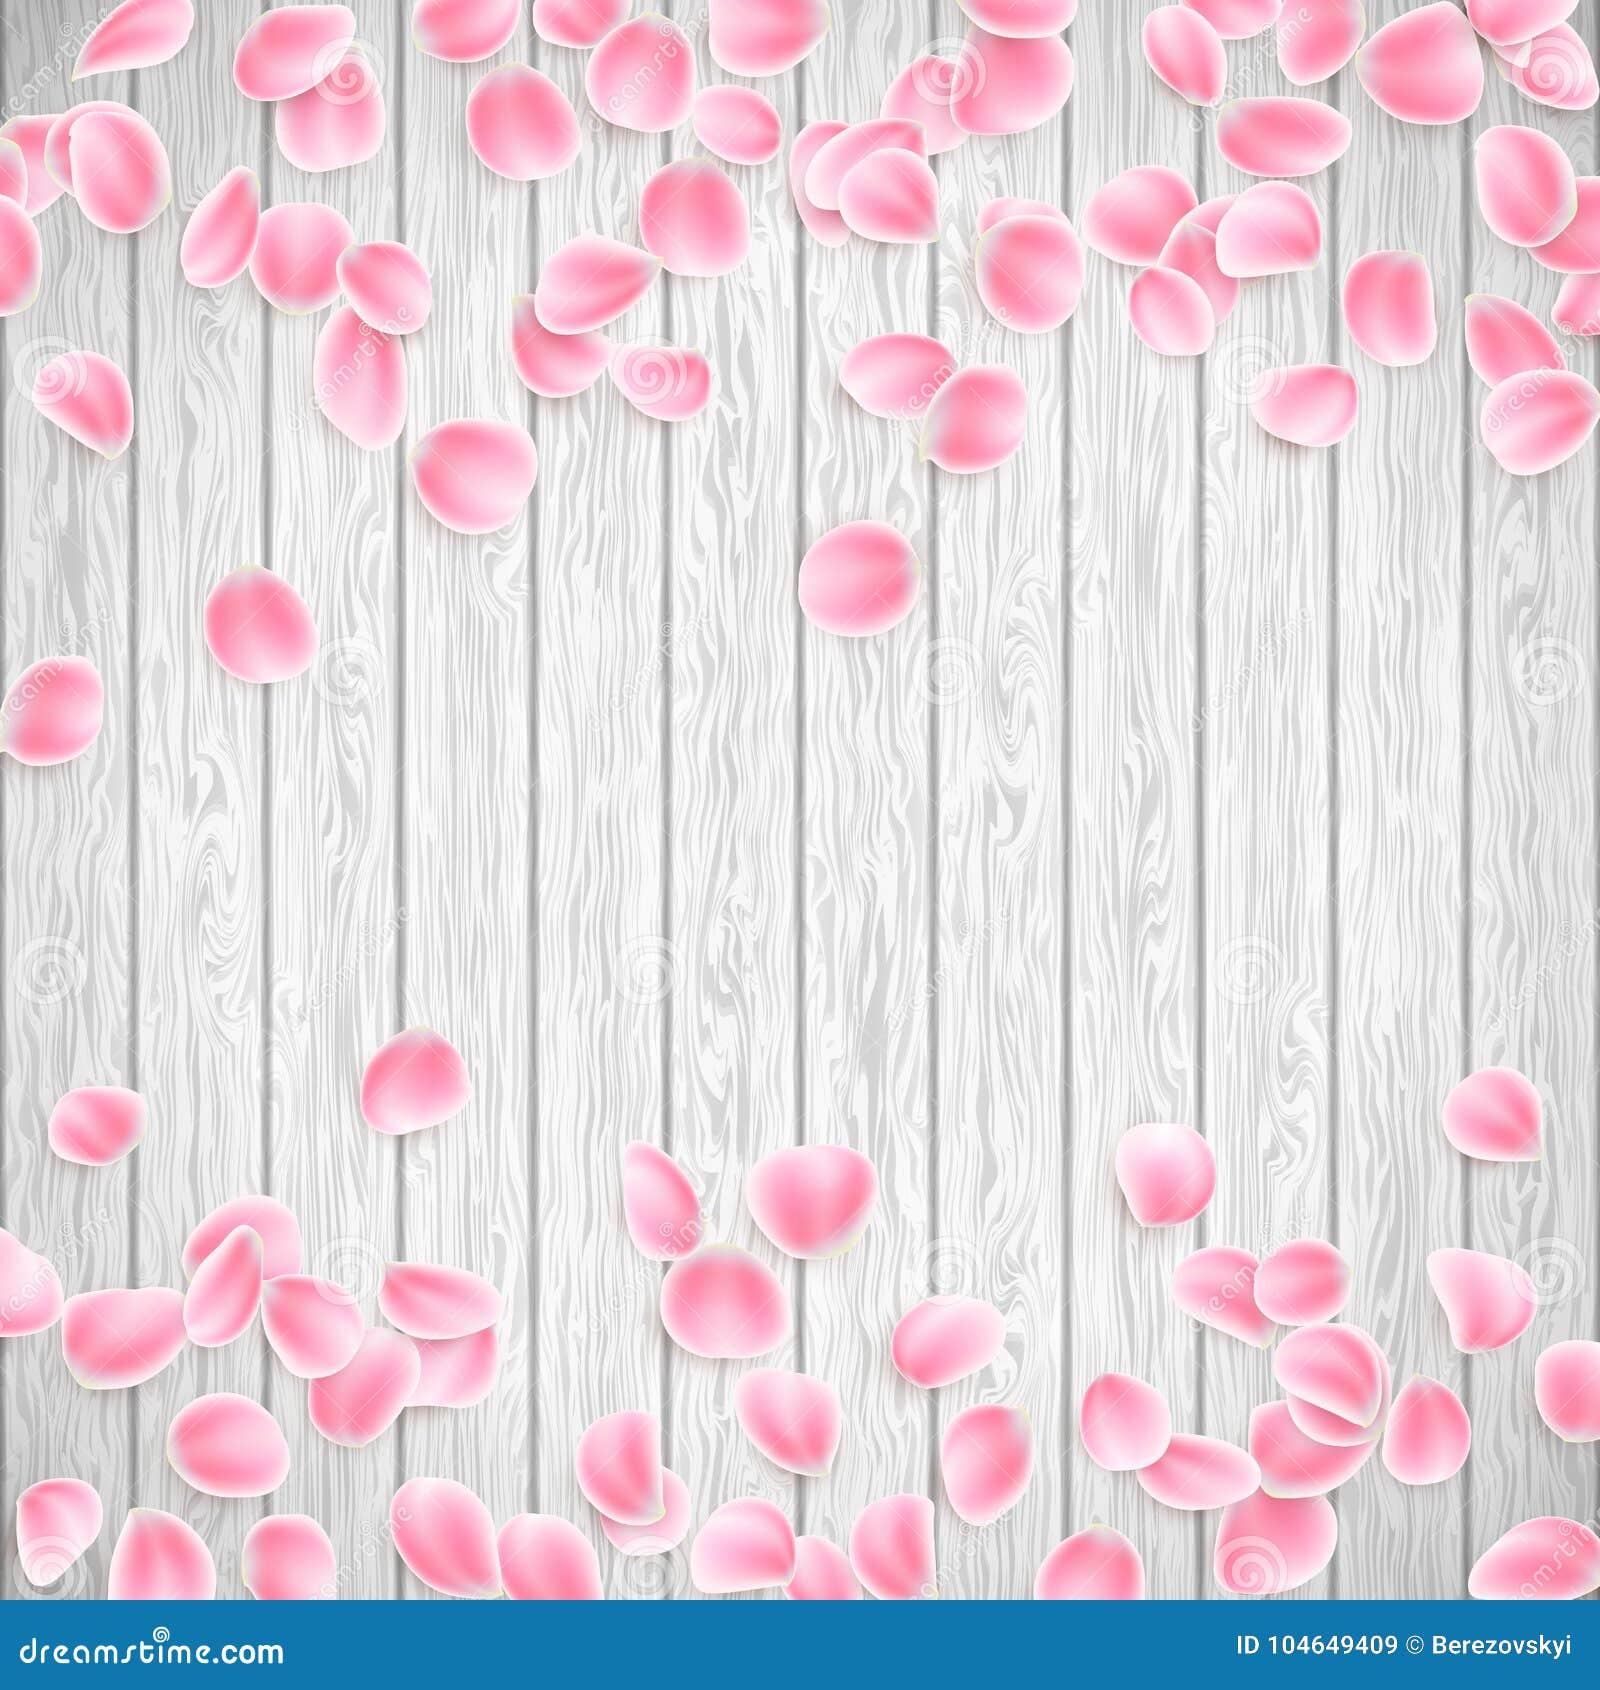 Realistic Sakura Petals On A White Wooden Background. EPS 10 Vector